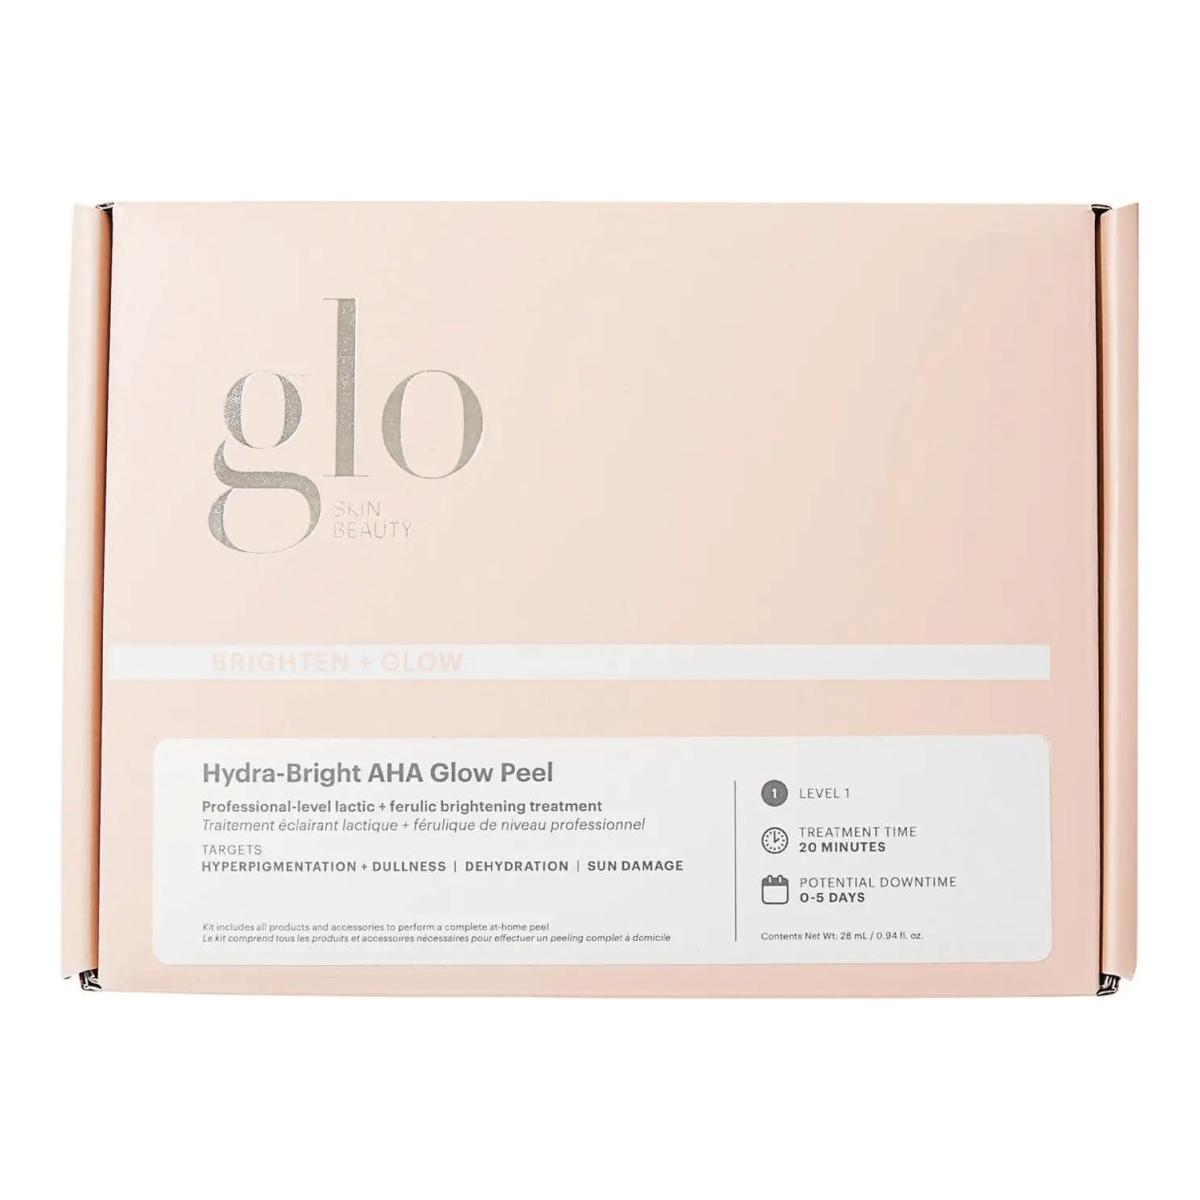 Glo Skin Beauty | Hydra-Bright AHA Glow Peel - DG International Ventures Limited